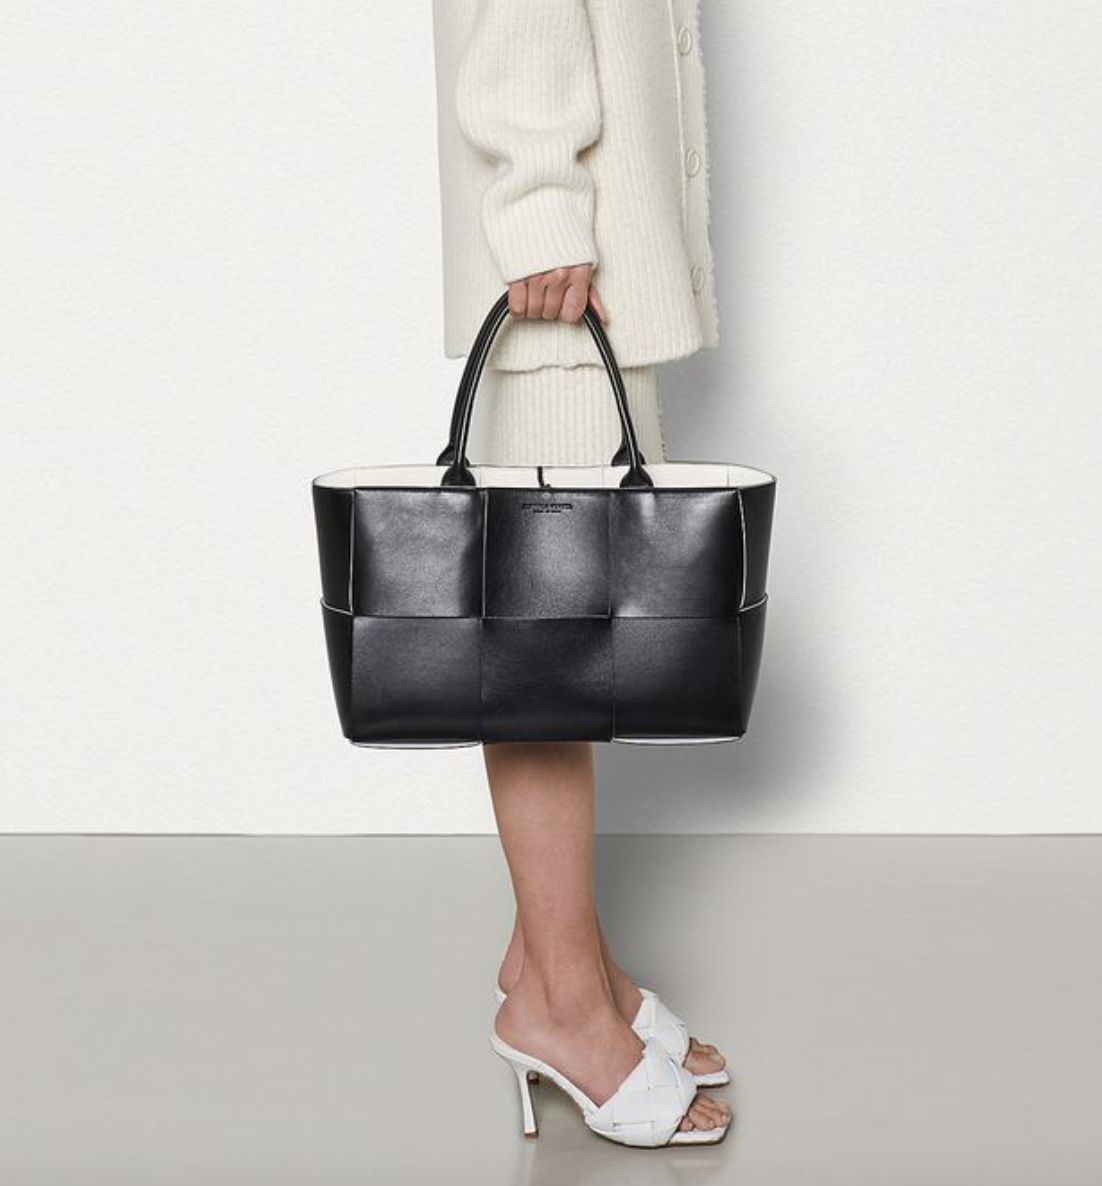 OL返工必備2021新款手提袋tote bag | Chloé帆布袋、Dior Book Tote、Bottega Veneta Arco Tote實用又耐看